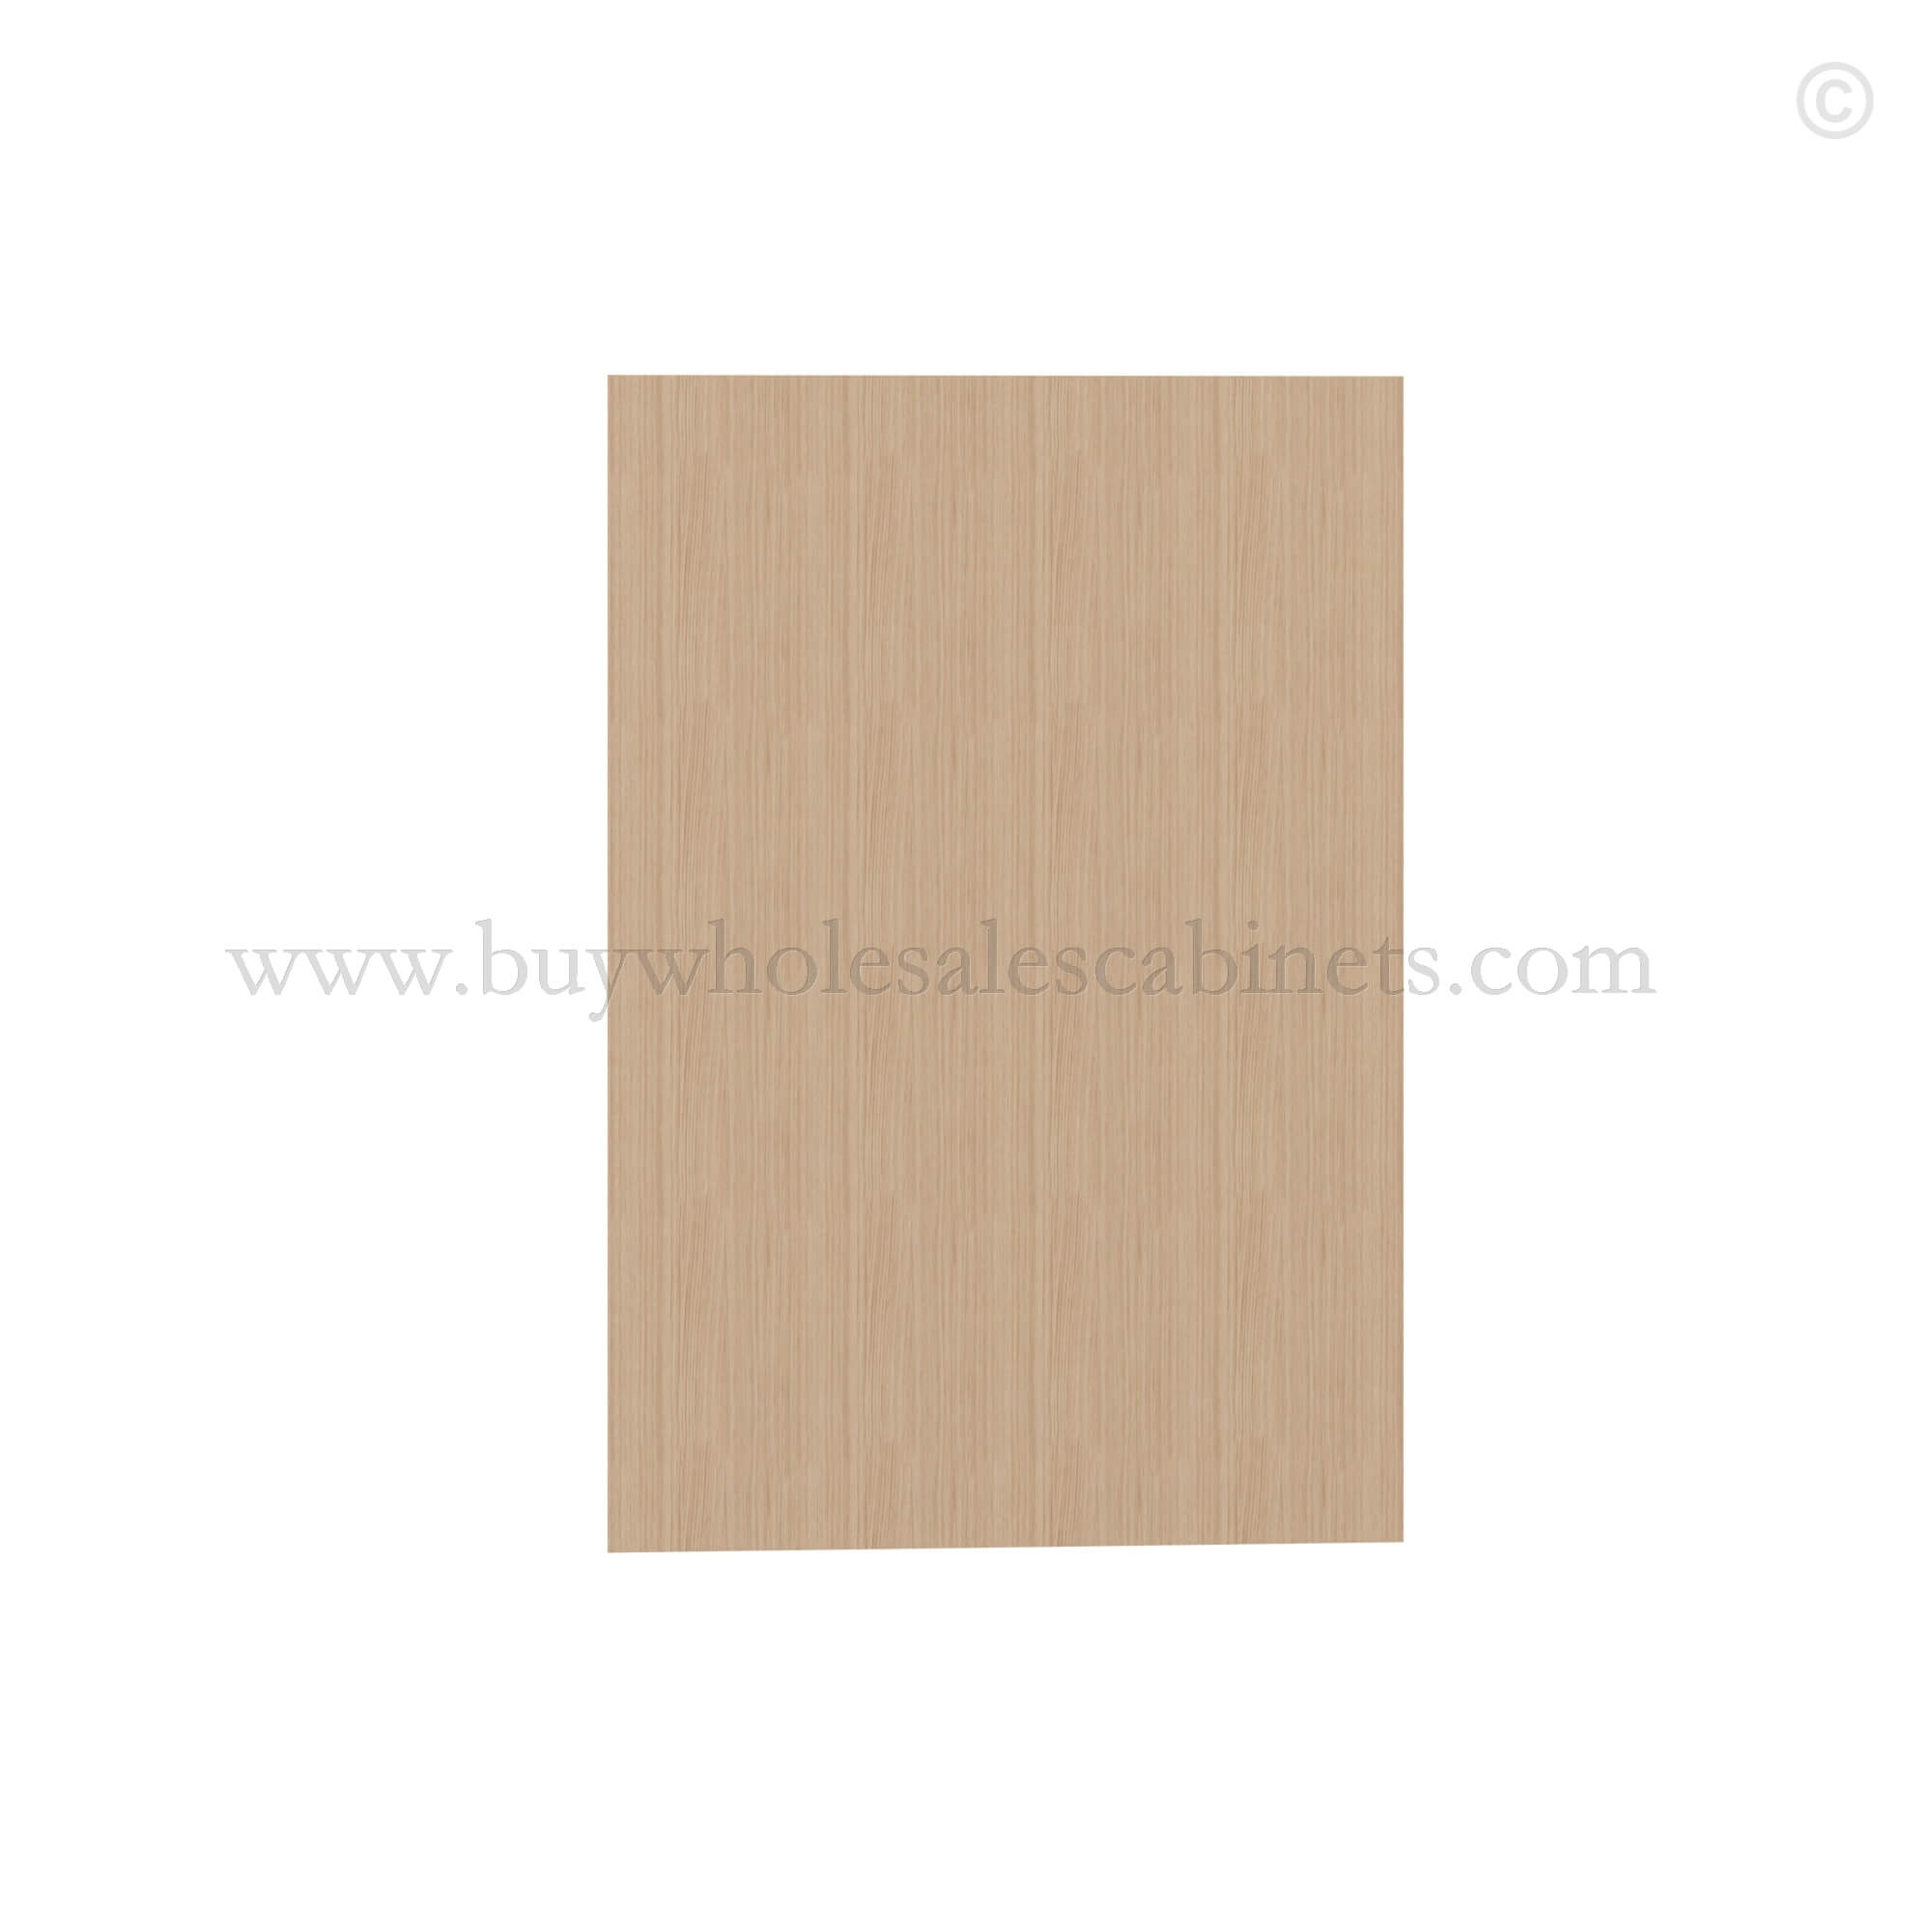 Slim Oak Shaker Base Skin Veneer Panel, rta cabinets, wholesale cabinets